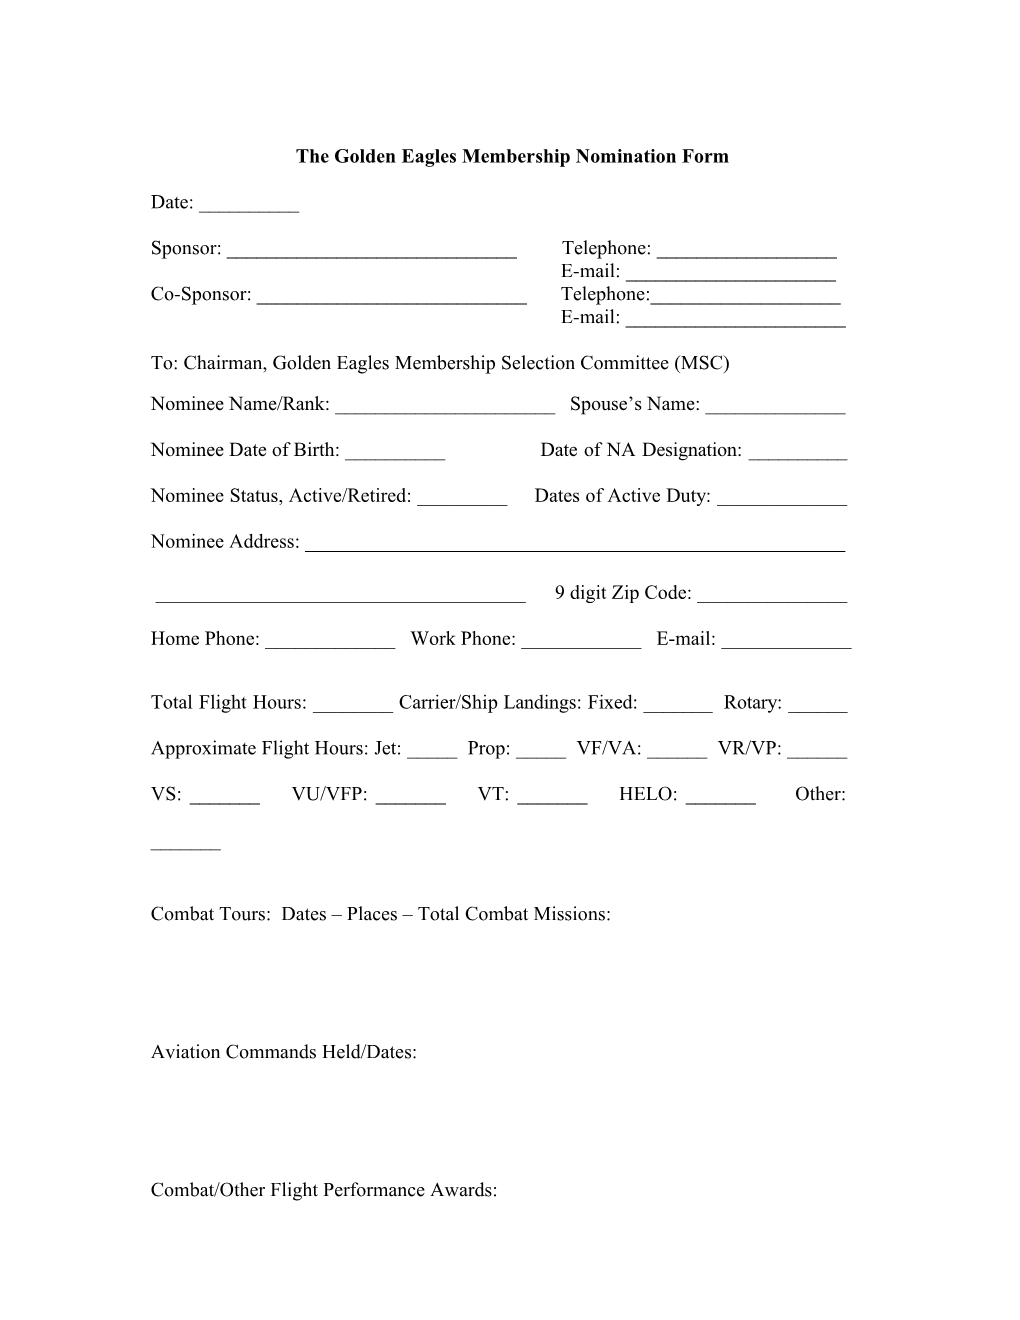 The Golden Eagles Membership Nomination Form